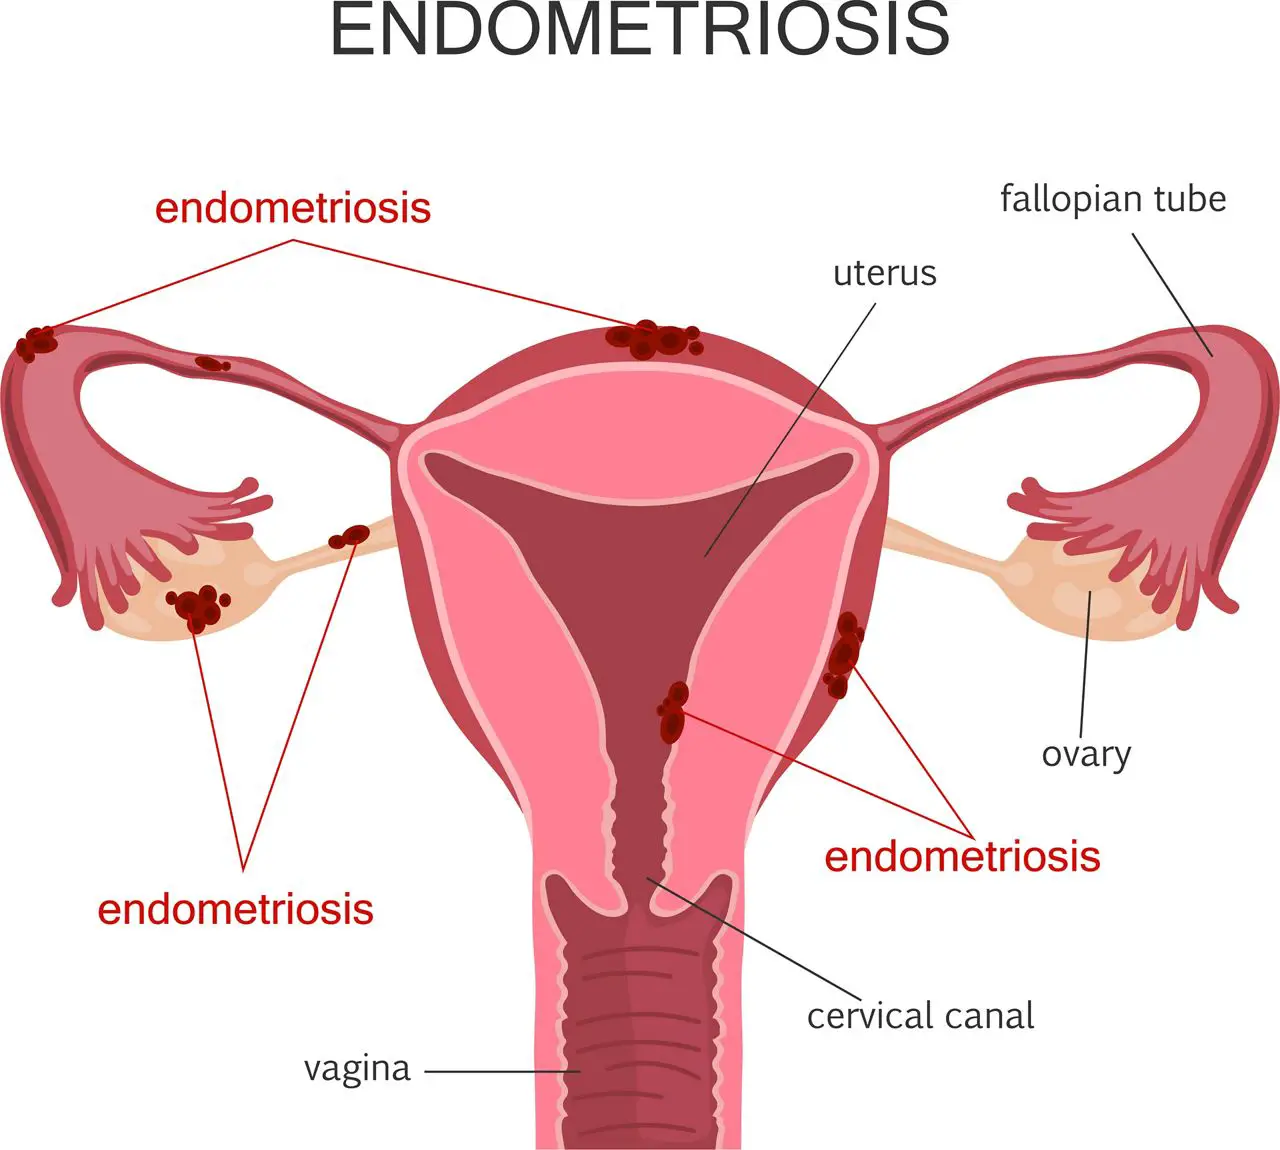 Norton Gynecologist Explains Fibroids and Endometriosis